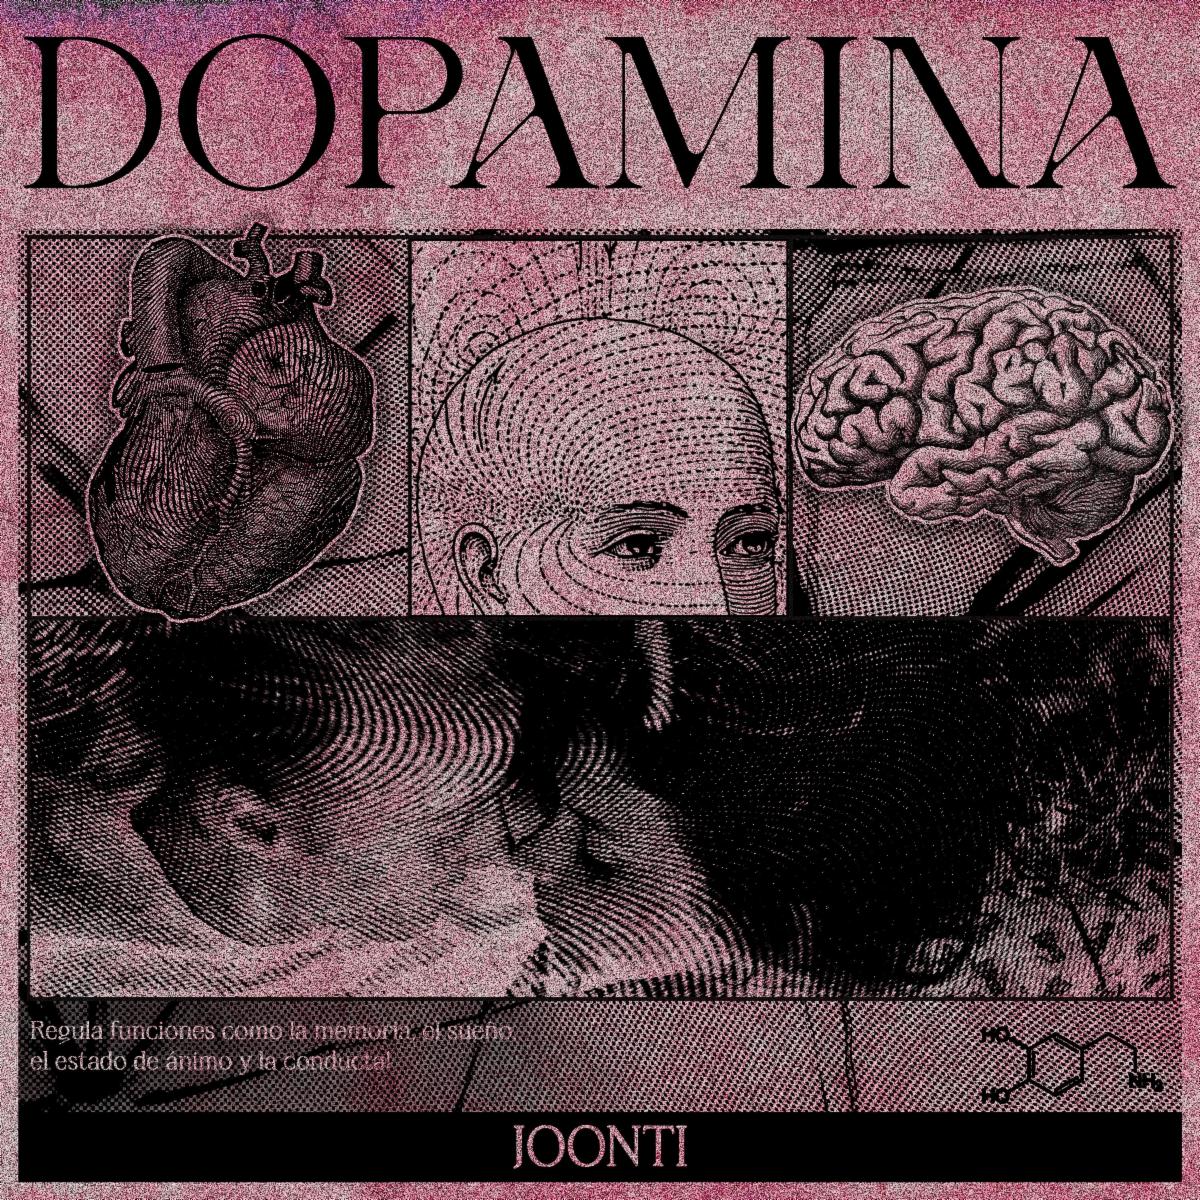 JOONTI estrena nuevo sencillo “Dopamina”